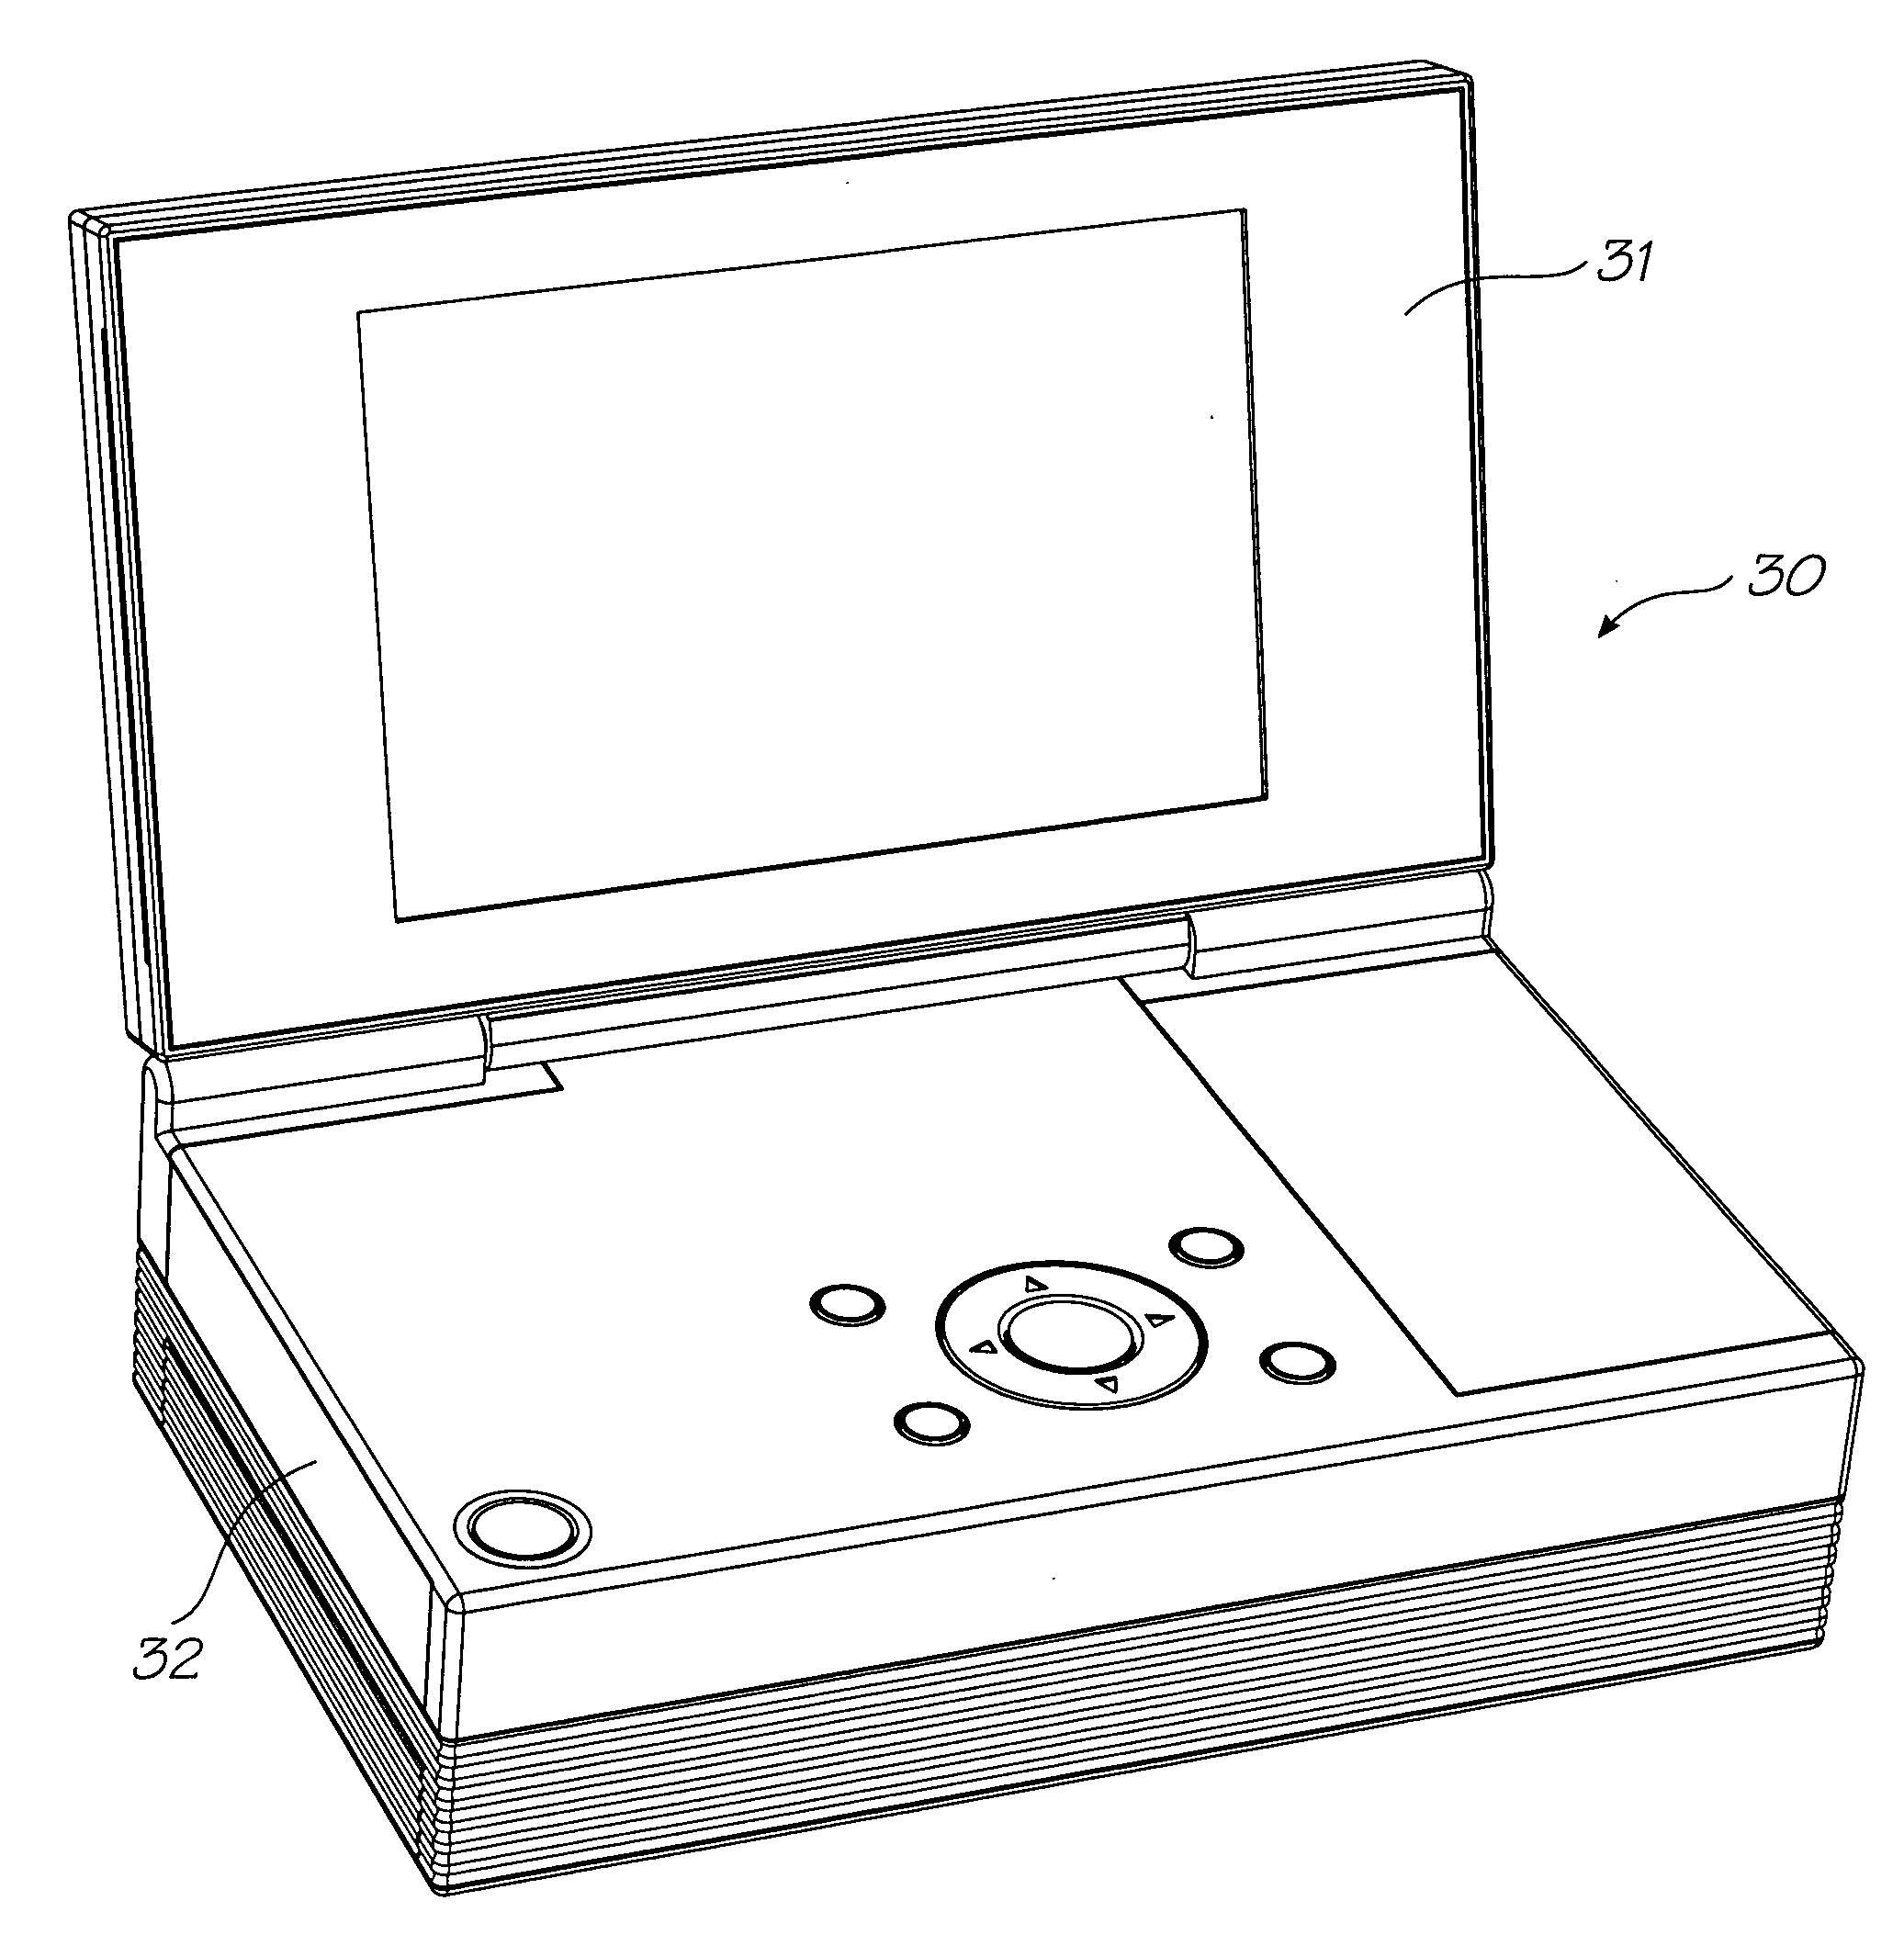 PictBridge printer with photo-sized display screen